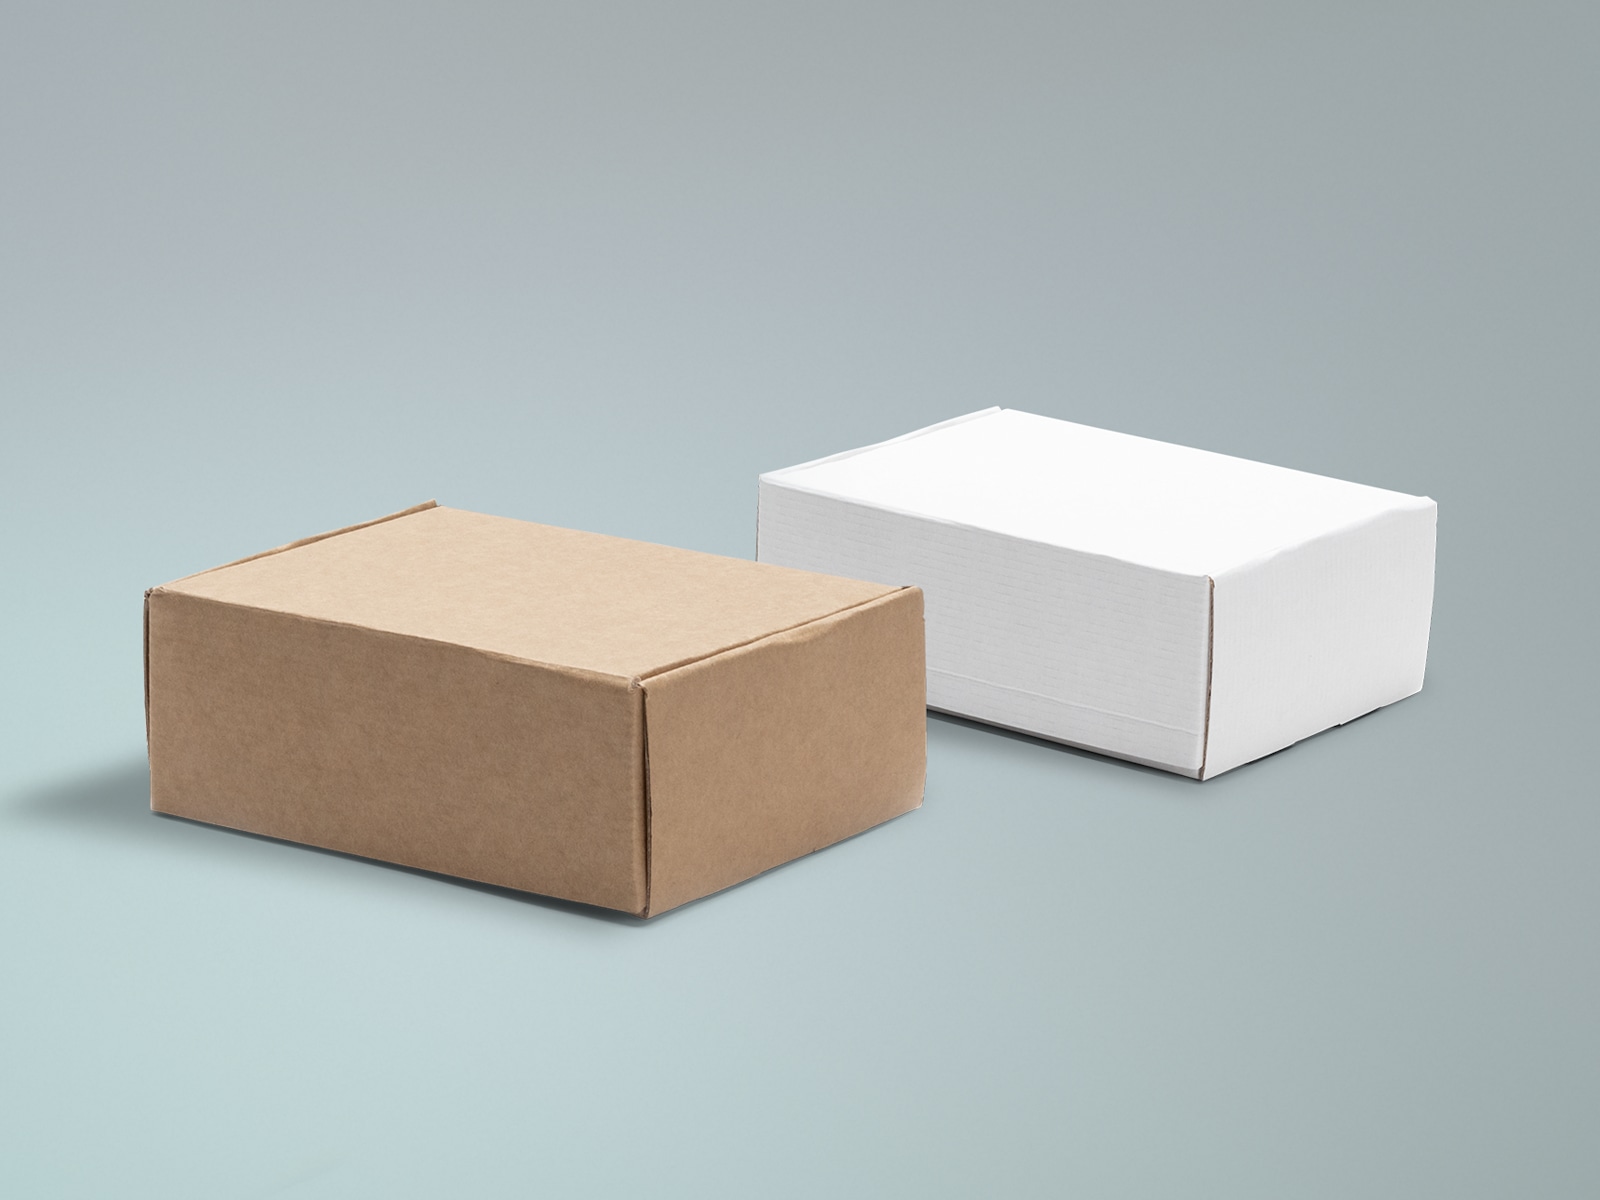 Boîtes en Carton Expédition & Stockage, Neutre sans logo - 40 x 40